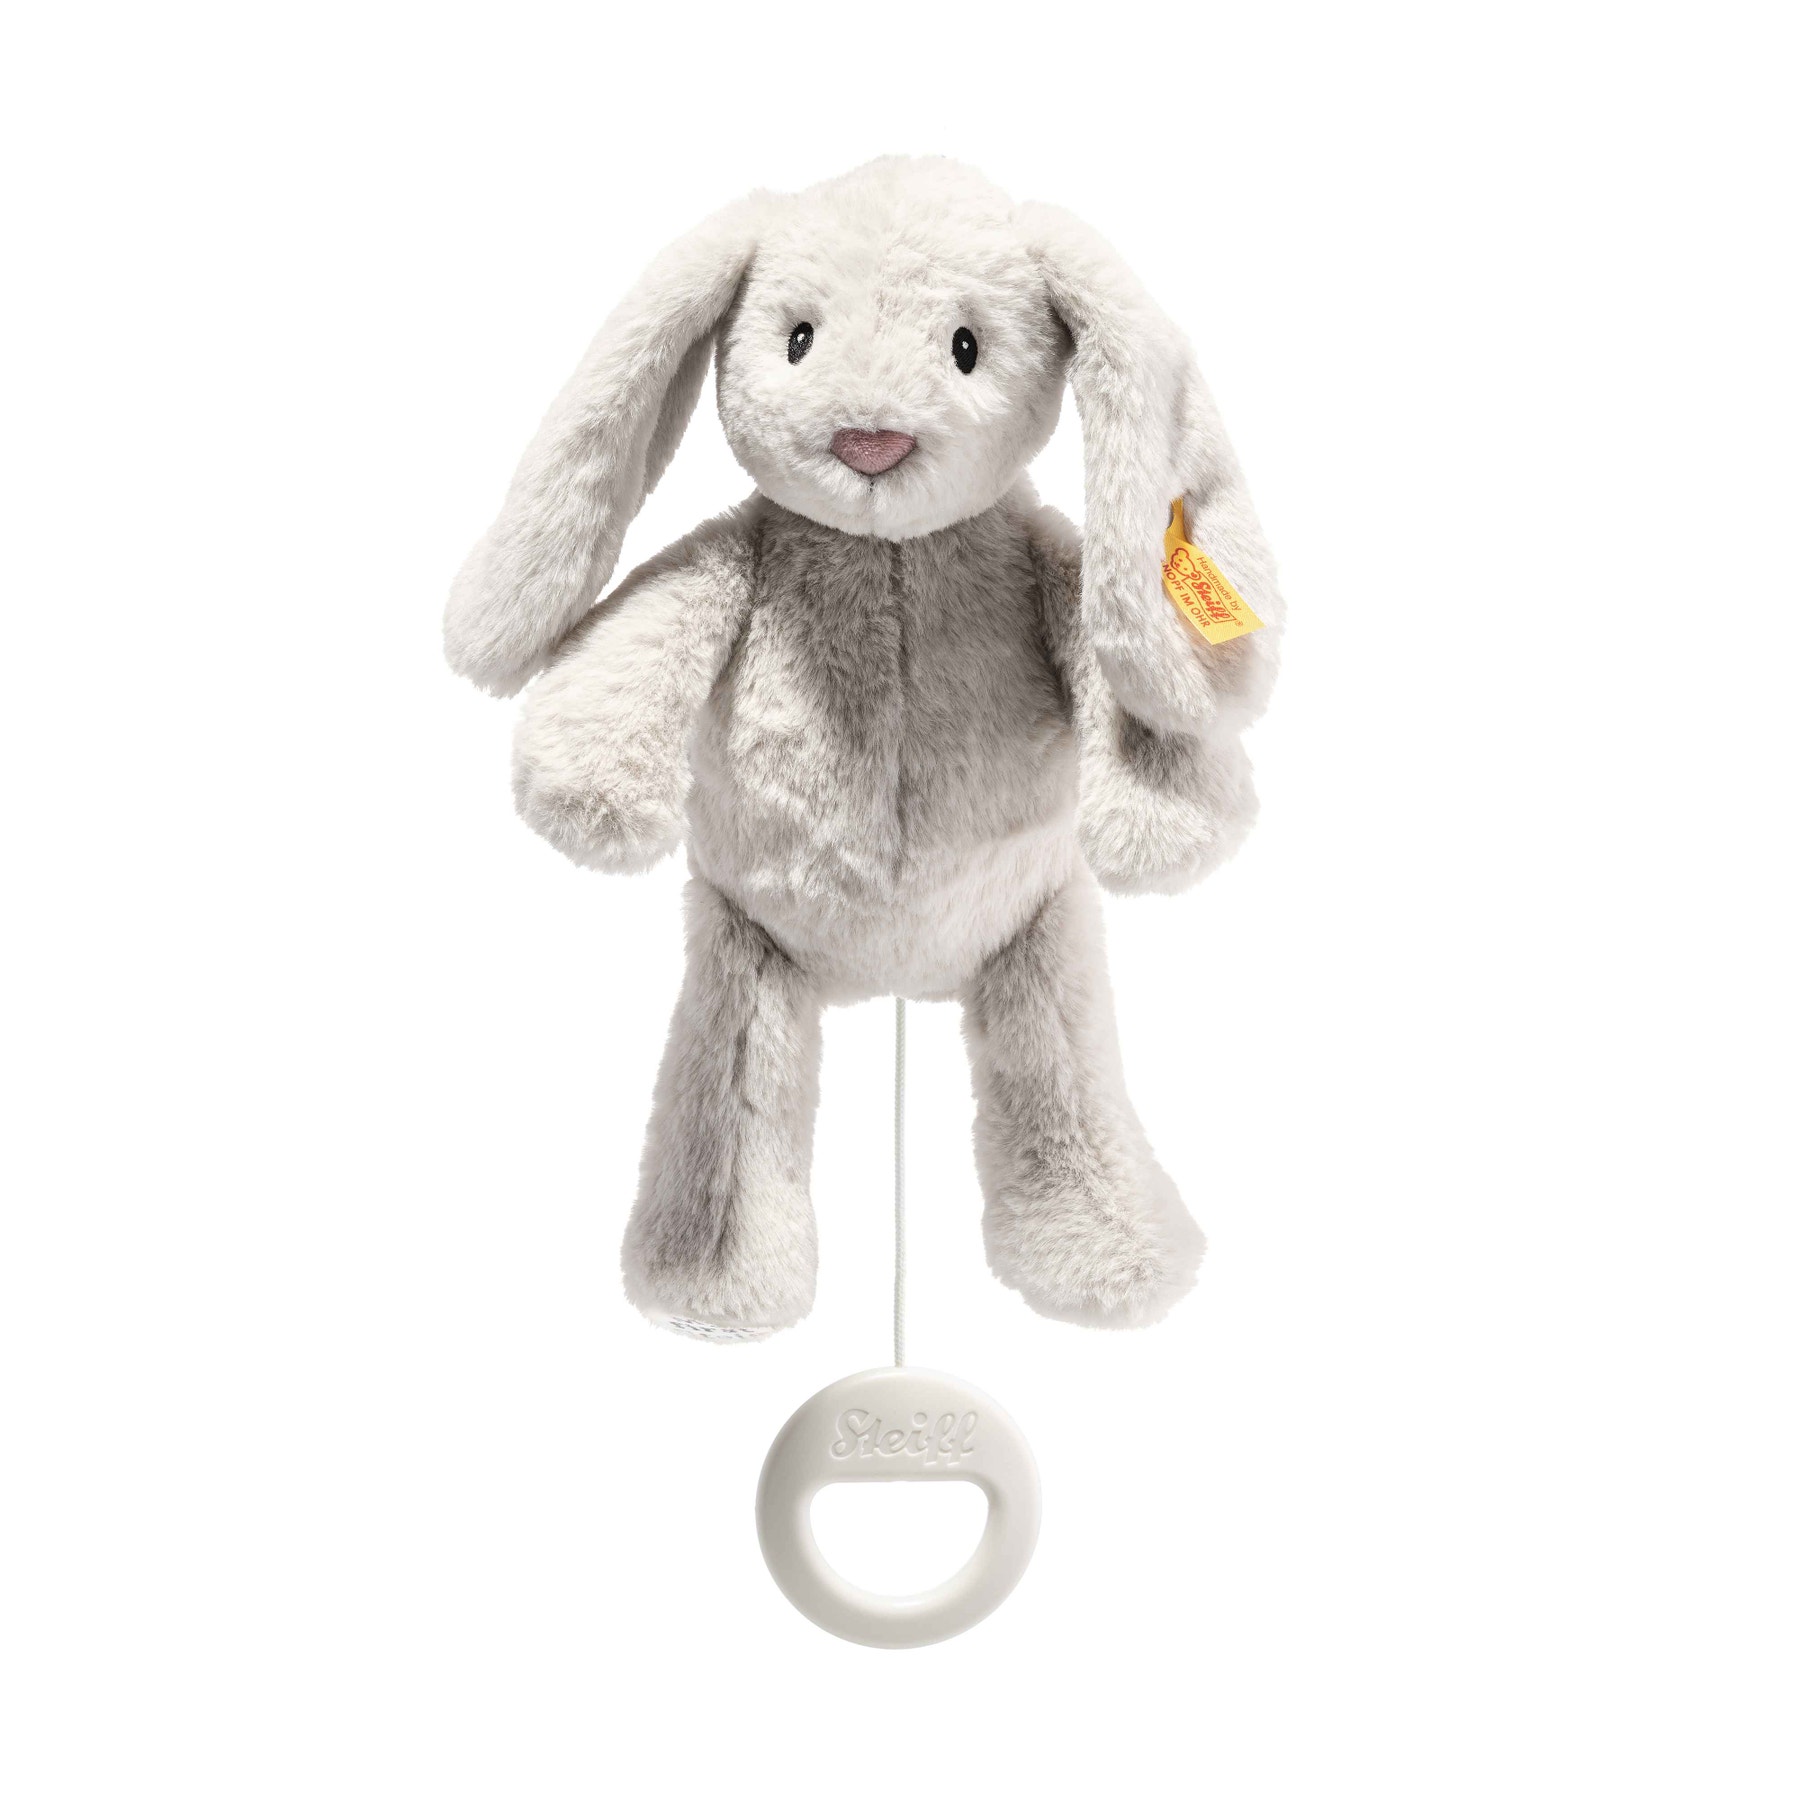 Hoppie Rabbit Musical Pull Toy